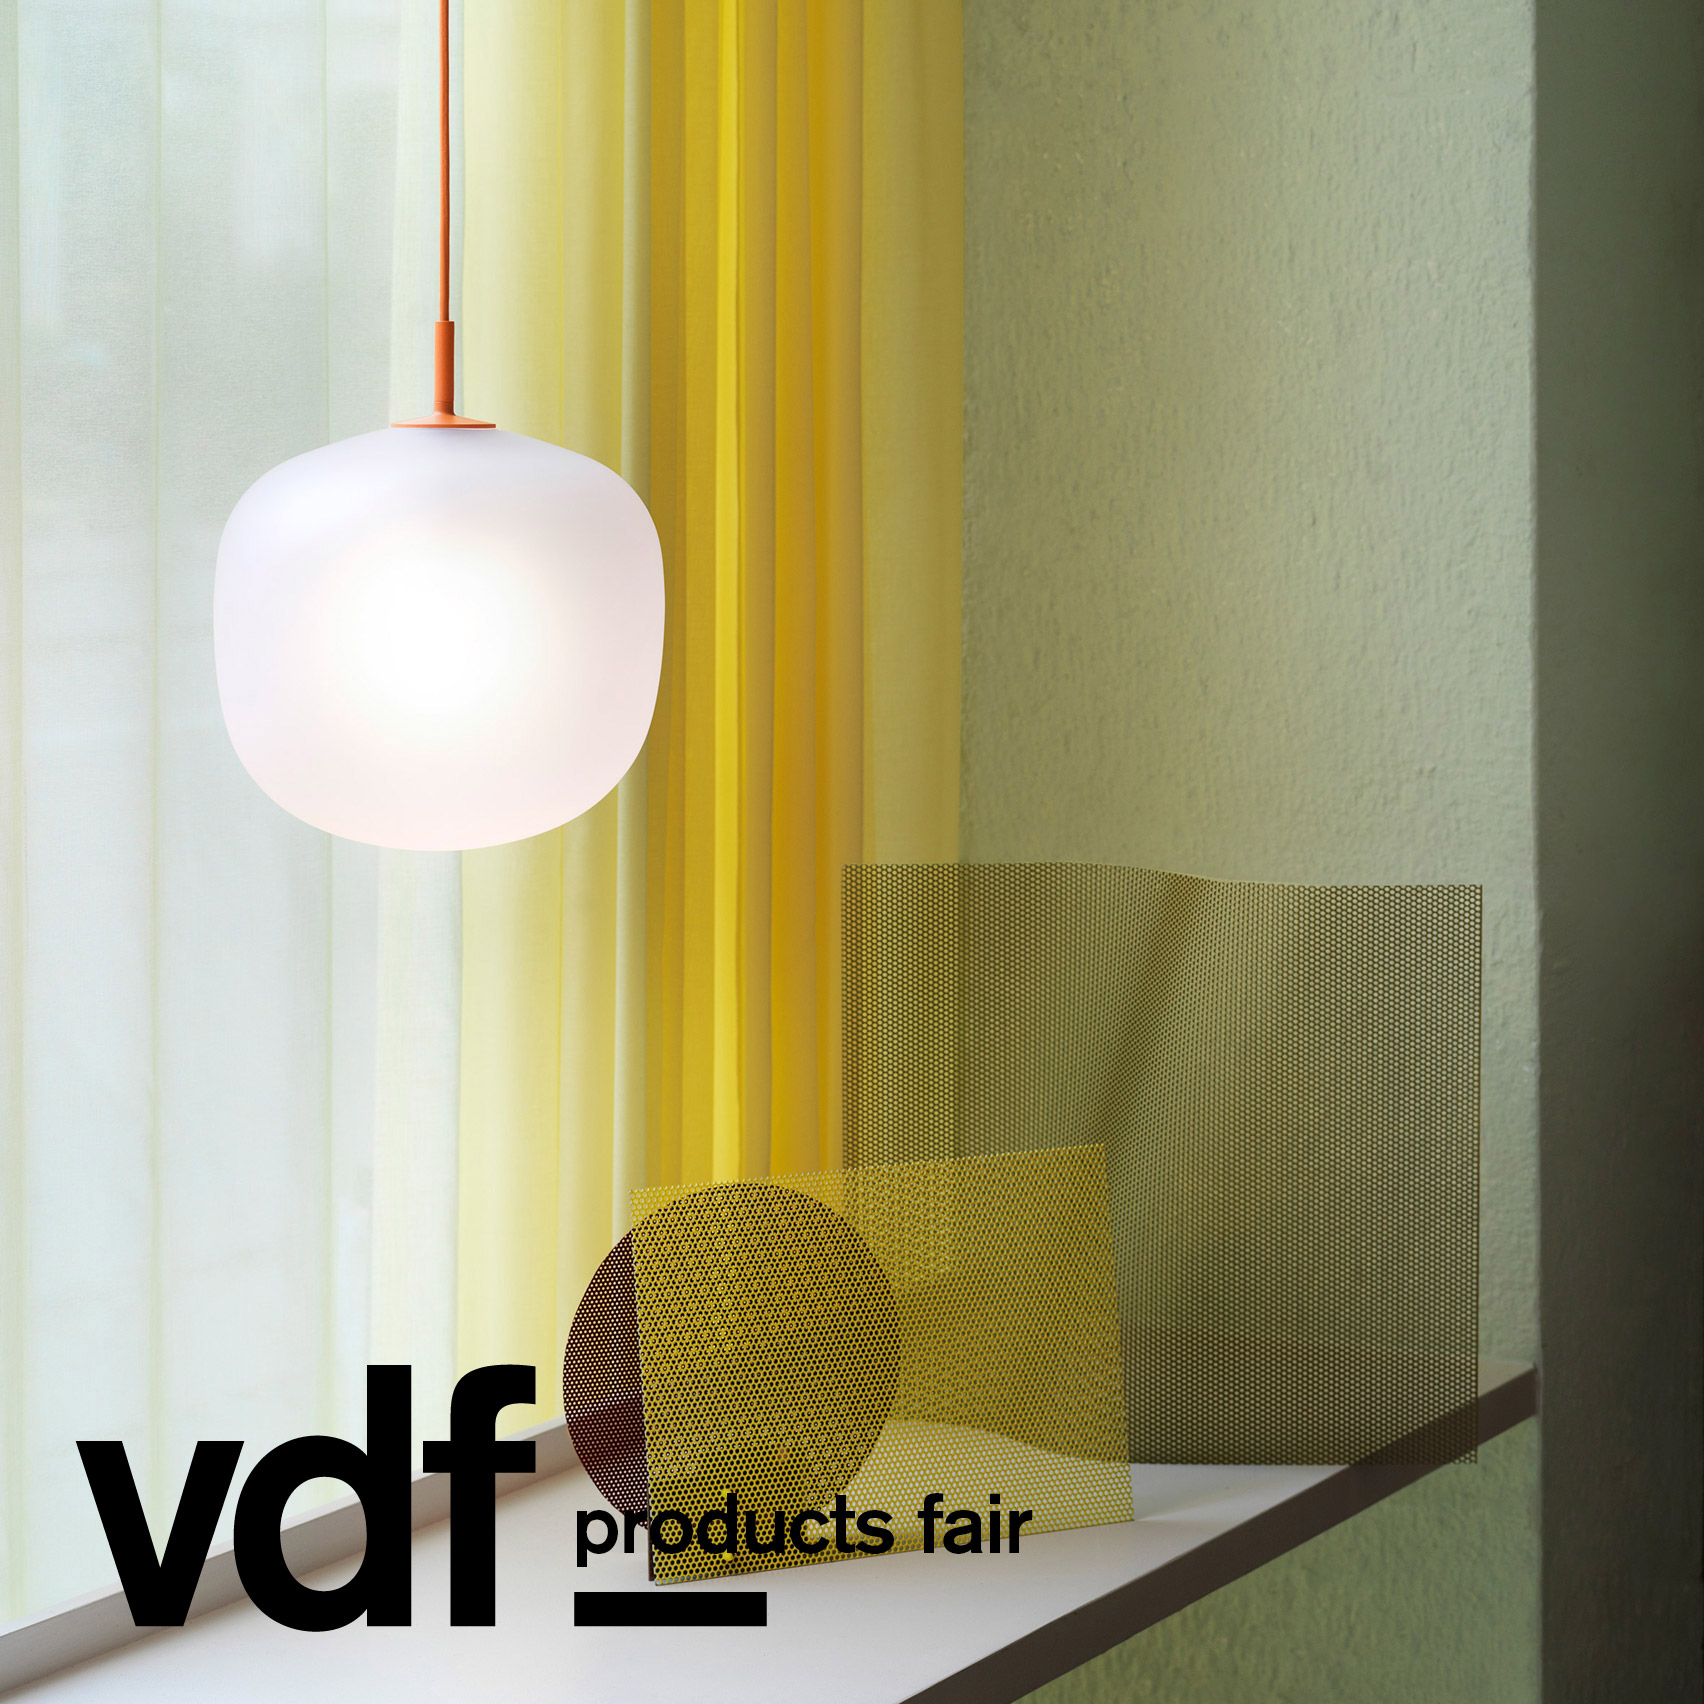 VDF products fair launches